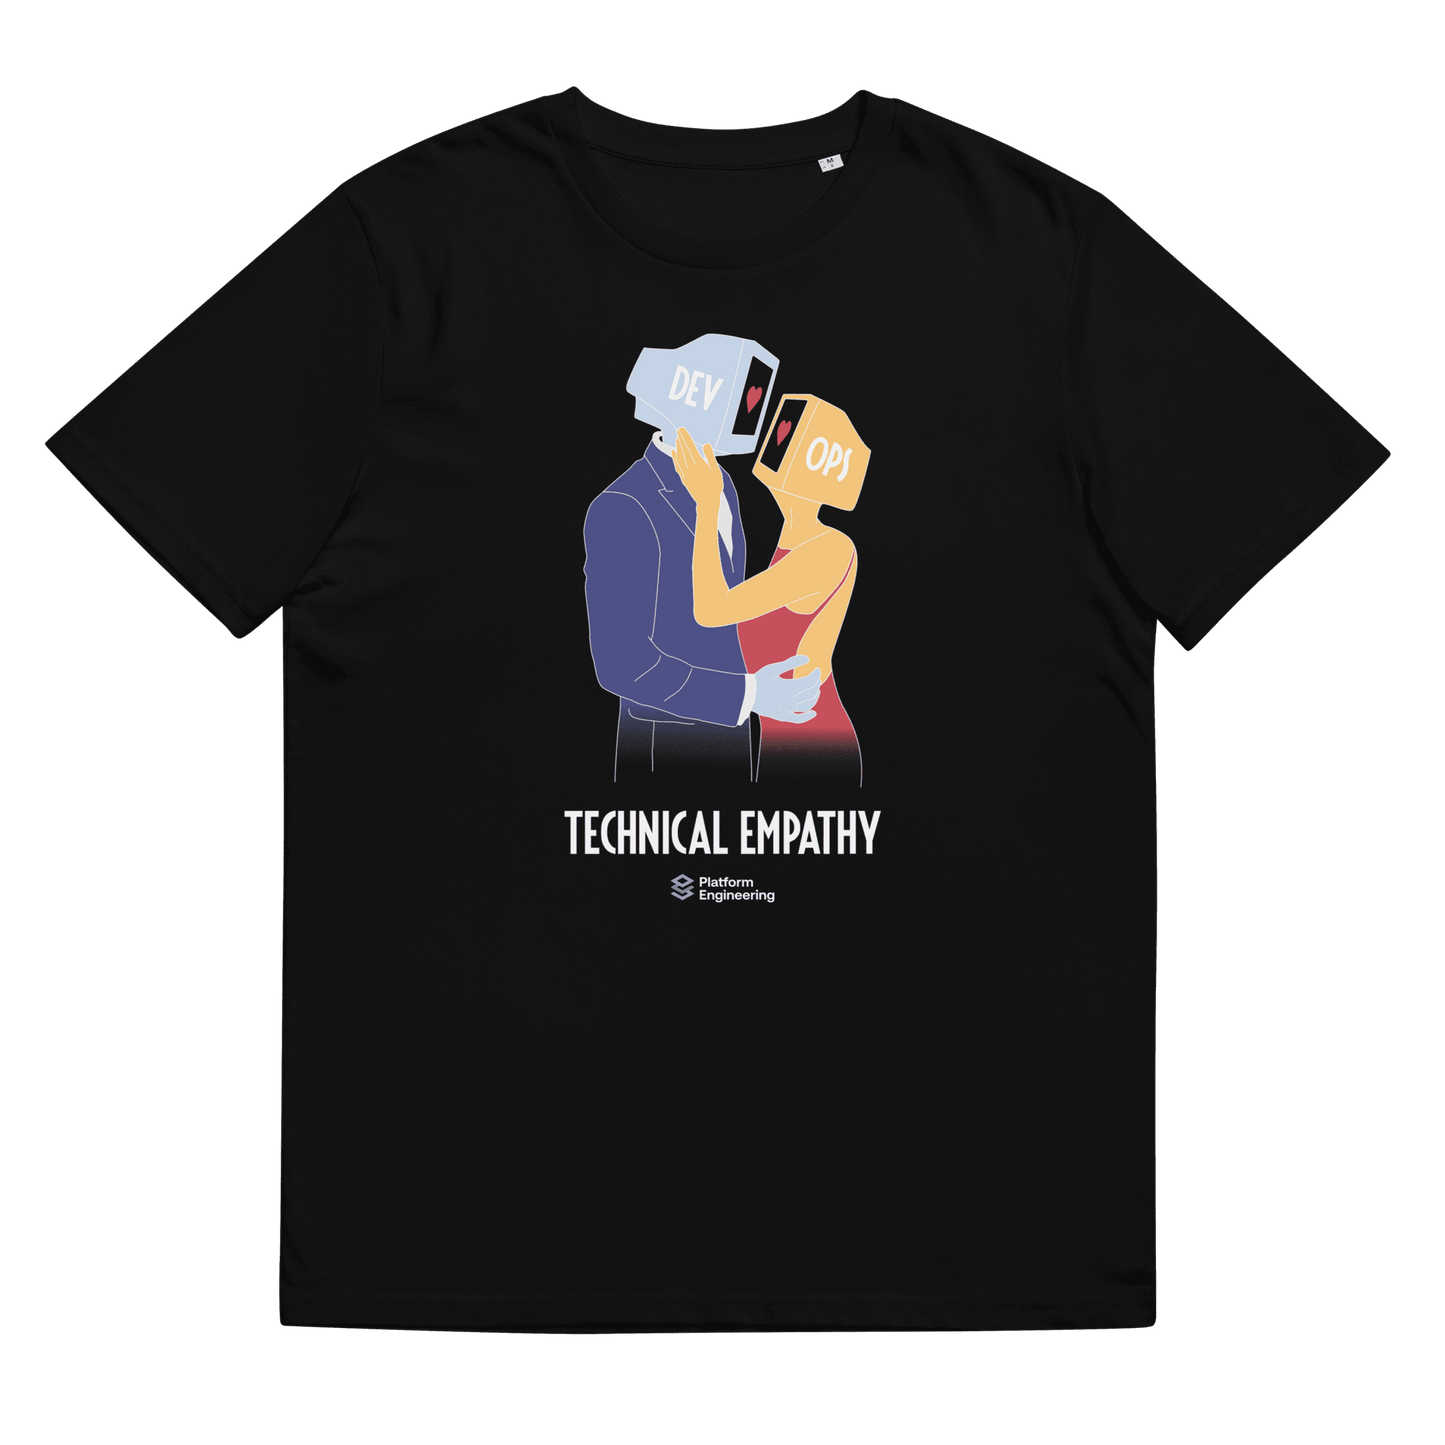 "Technical empathy" unisex t-shirt